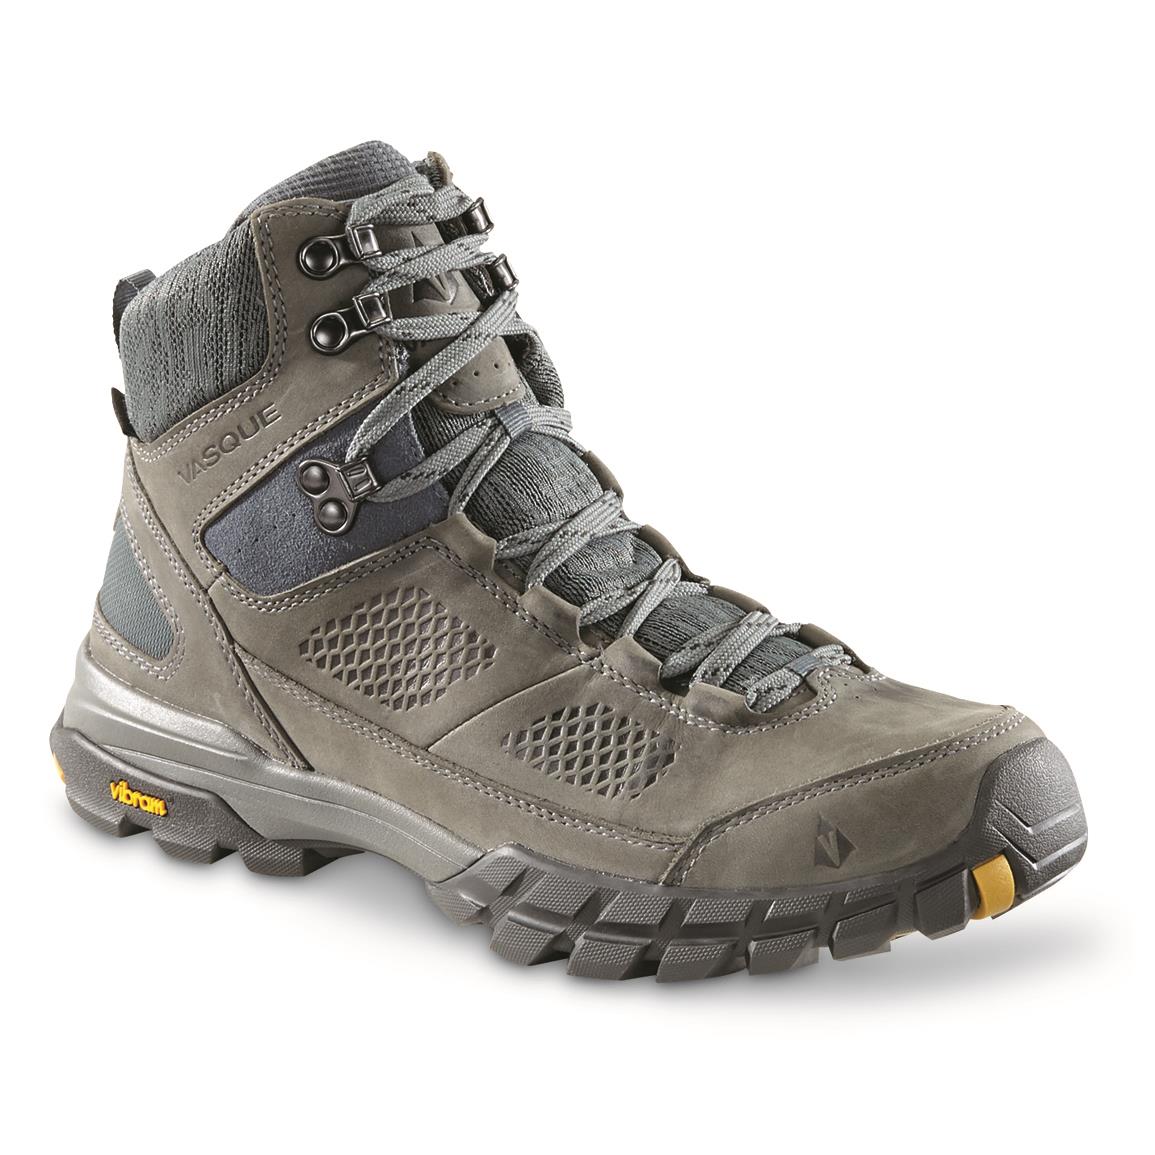 Vasque Men's Talus AT UltraDry Waterproof Hiking Boots, Dark Slate/tawny Olive